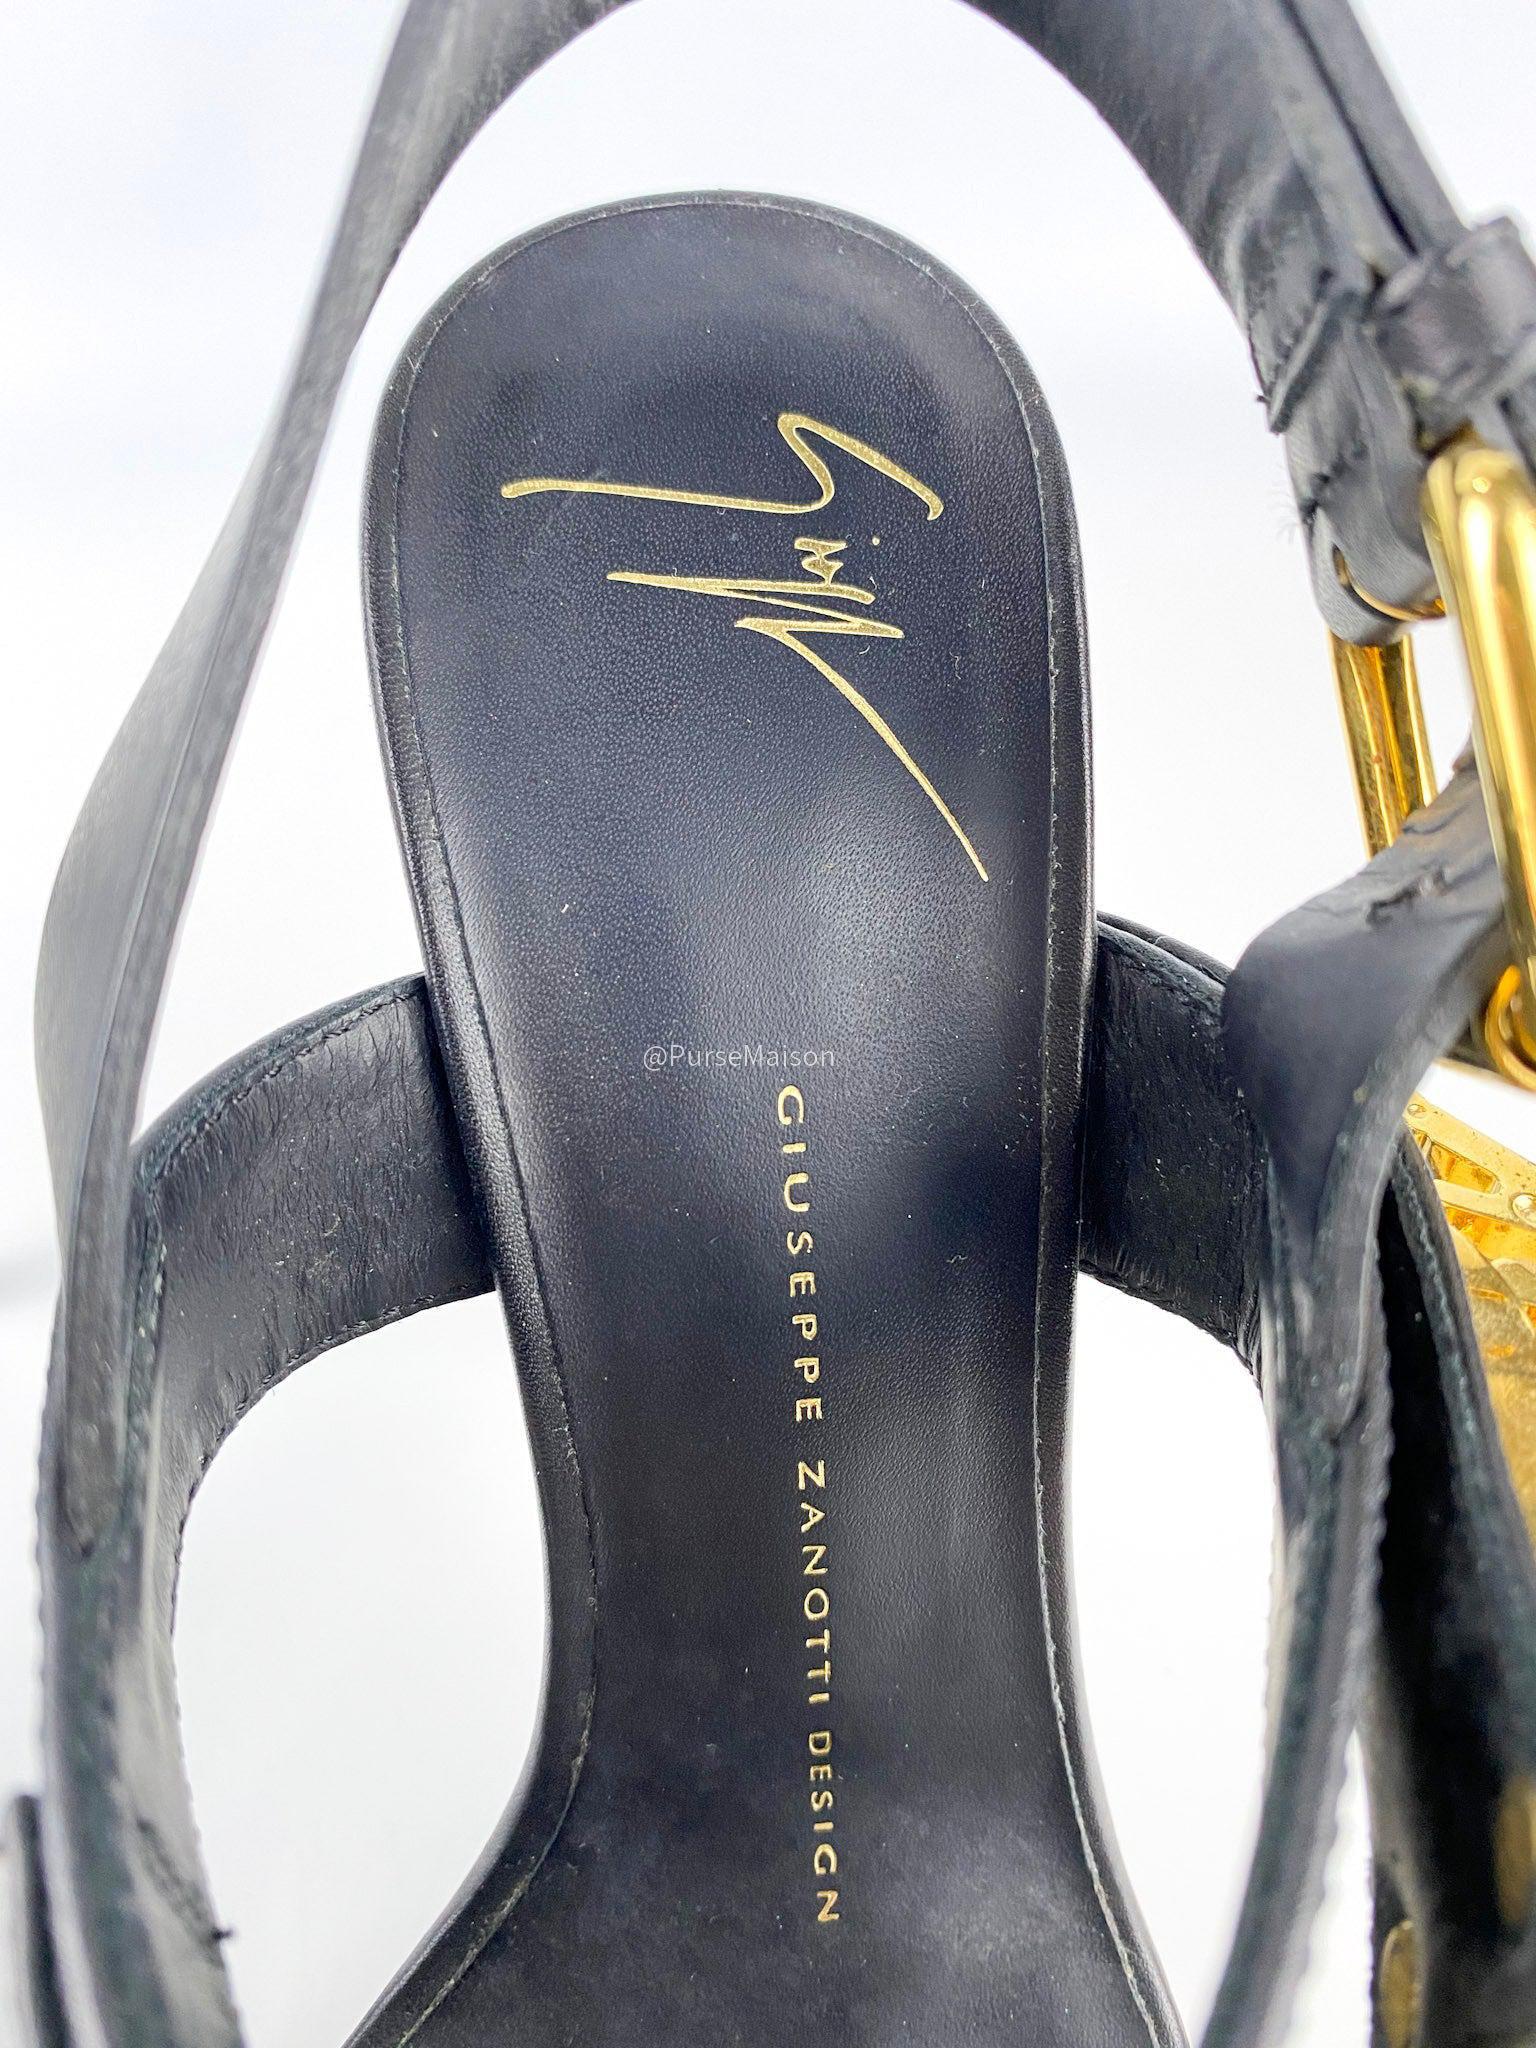 Giuseppe Zanotti Coline Ski Buckle Leather Sandals Size 37 EUR (23.5cm)